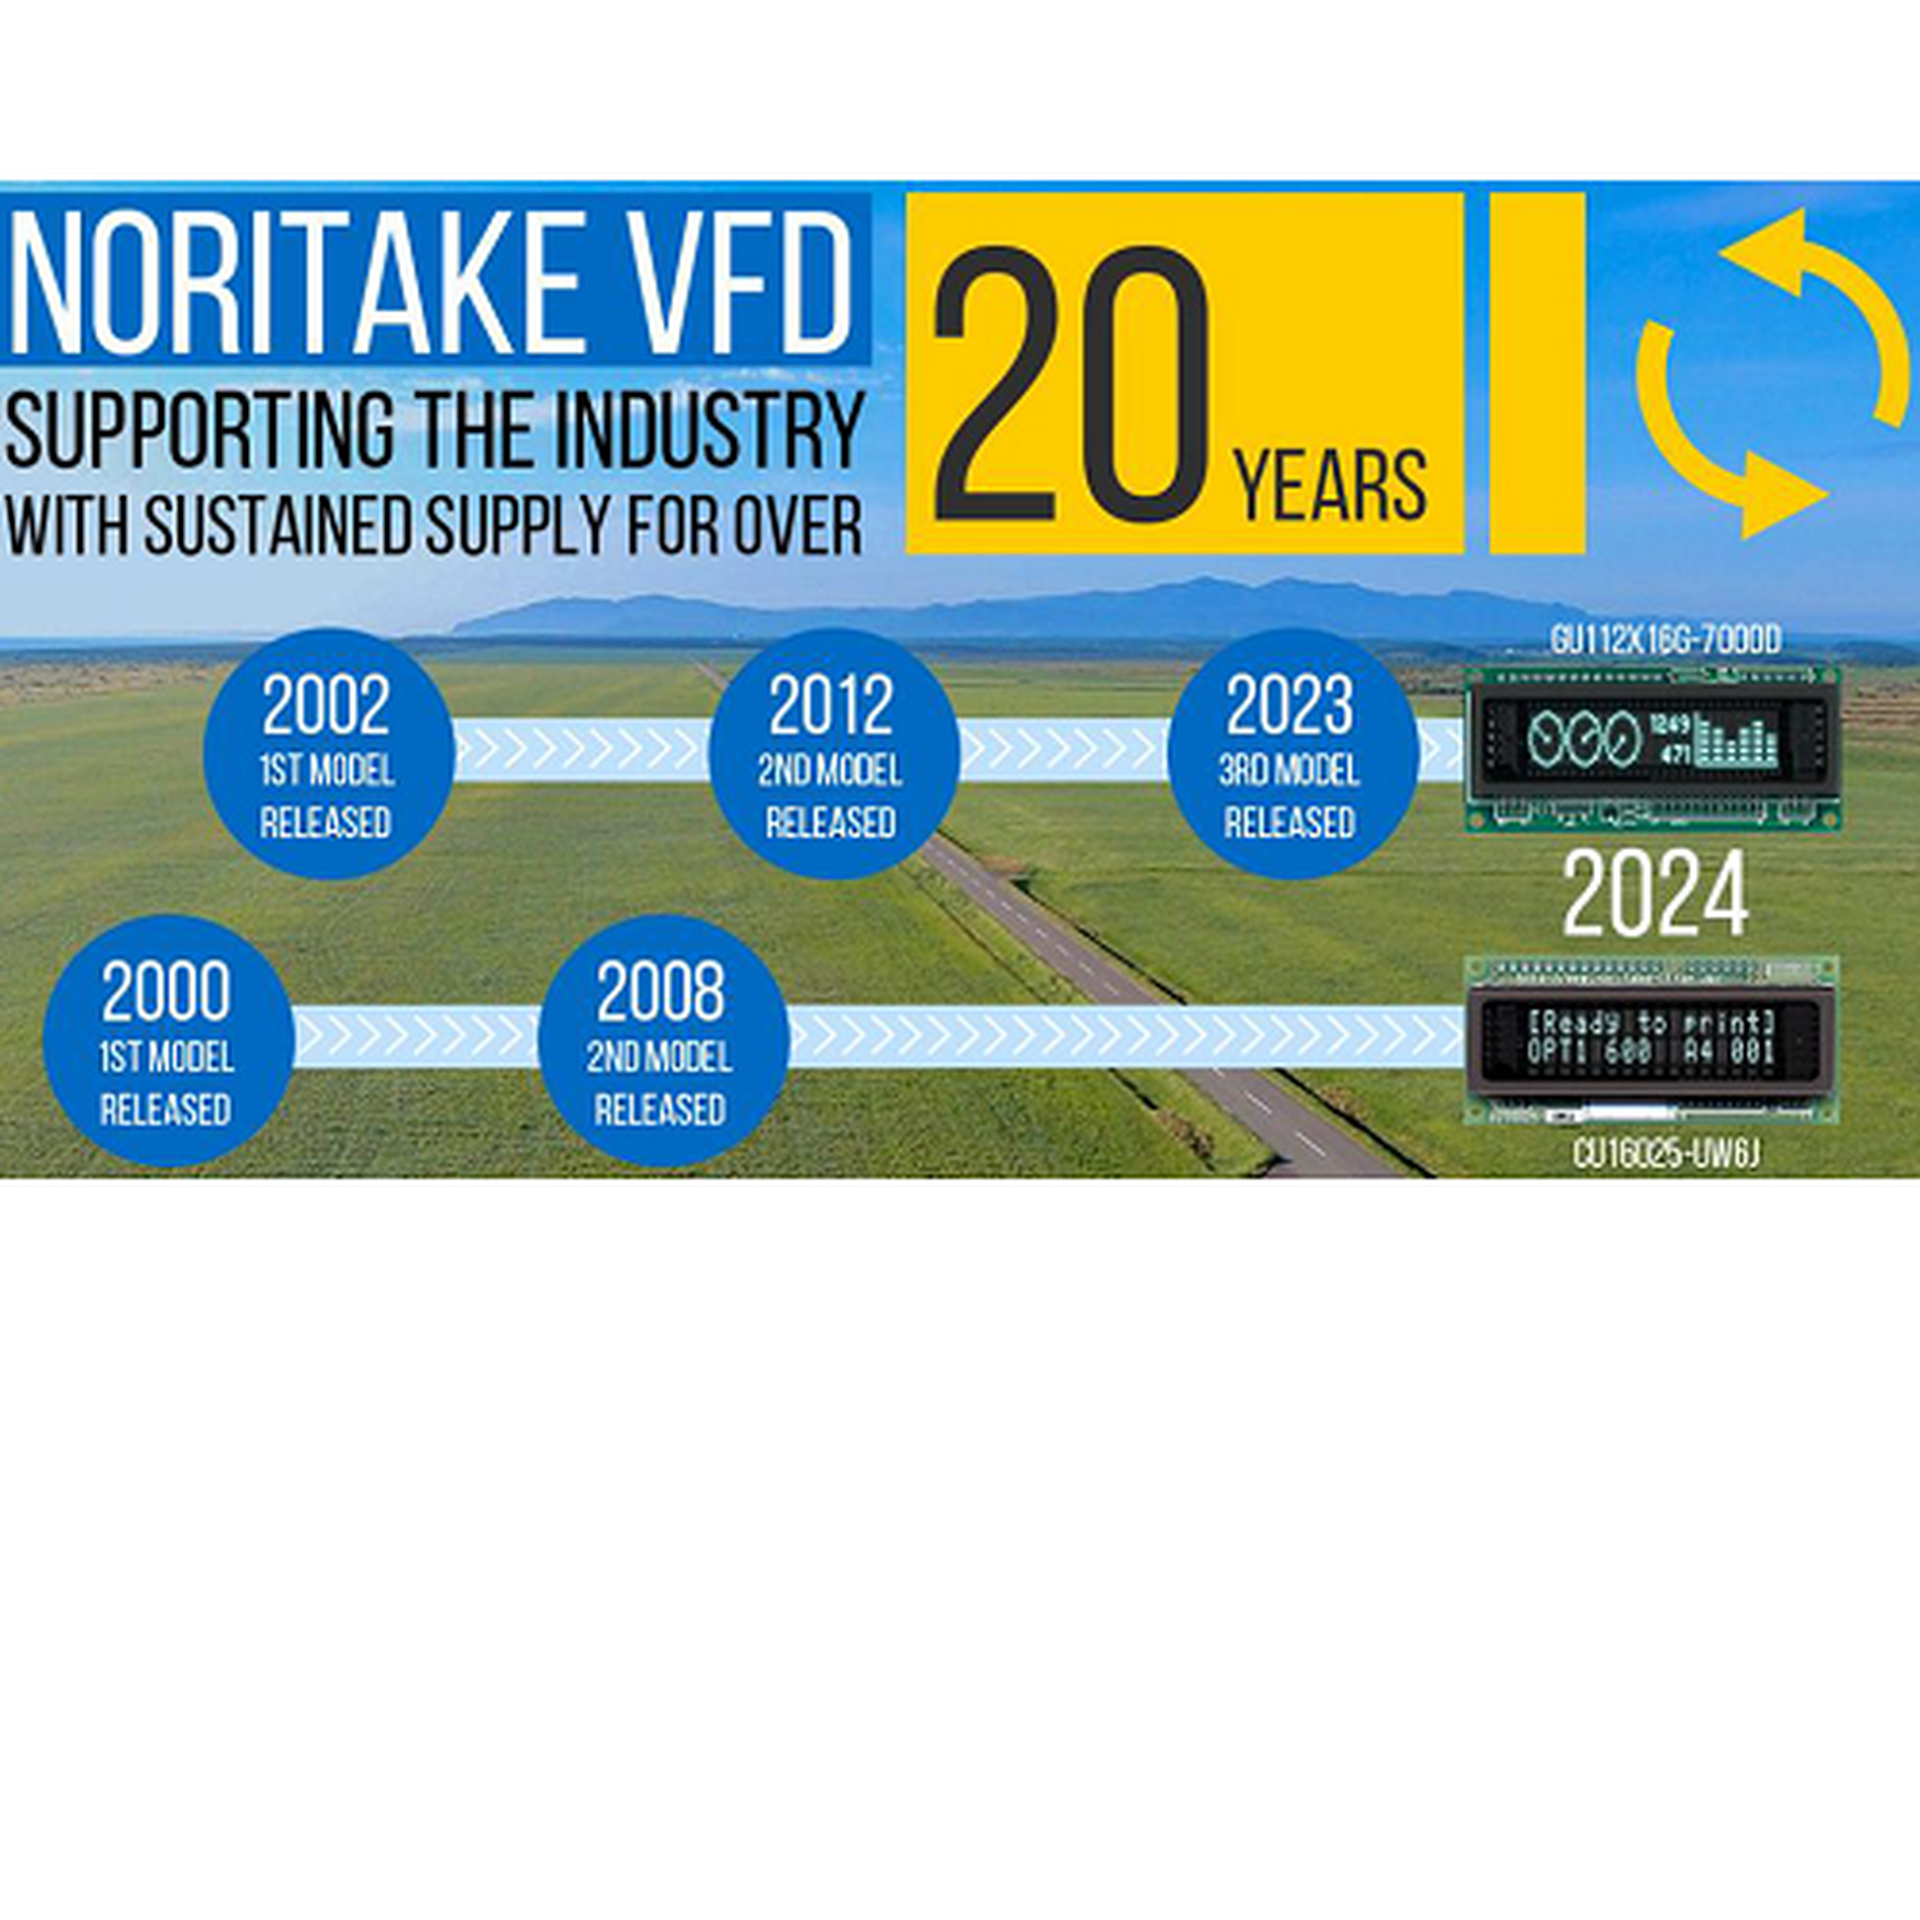 Noritake VFD overview